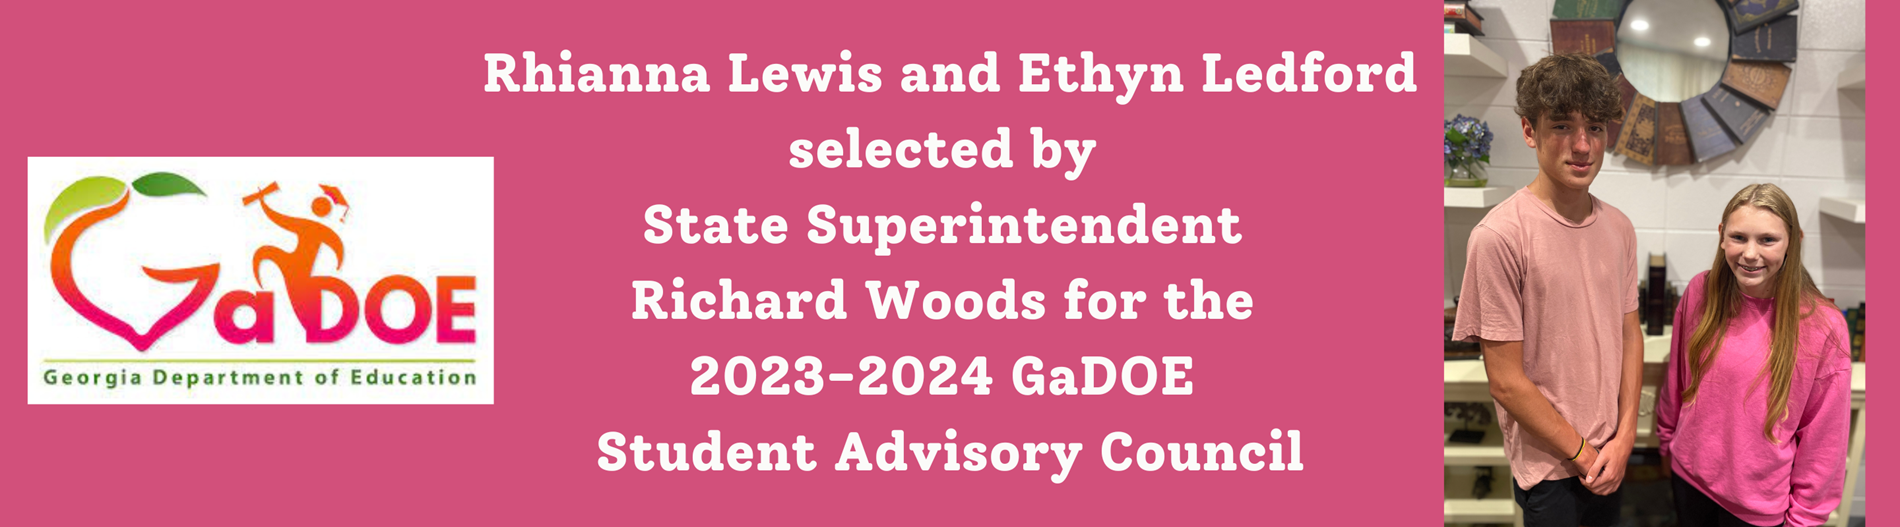 Rhianna Lewis and Ethyn Ledford Selected for GaDOE Student Advisory Council